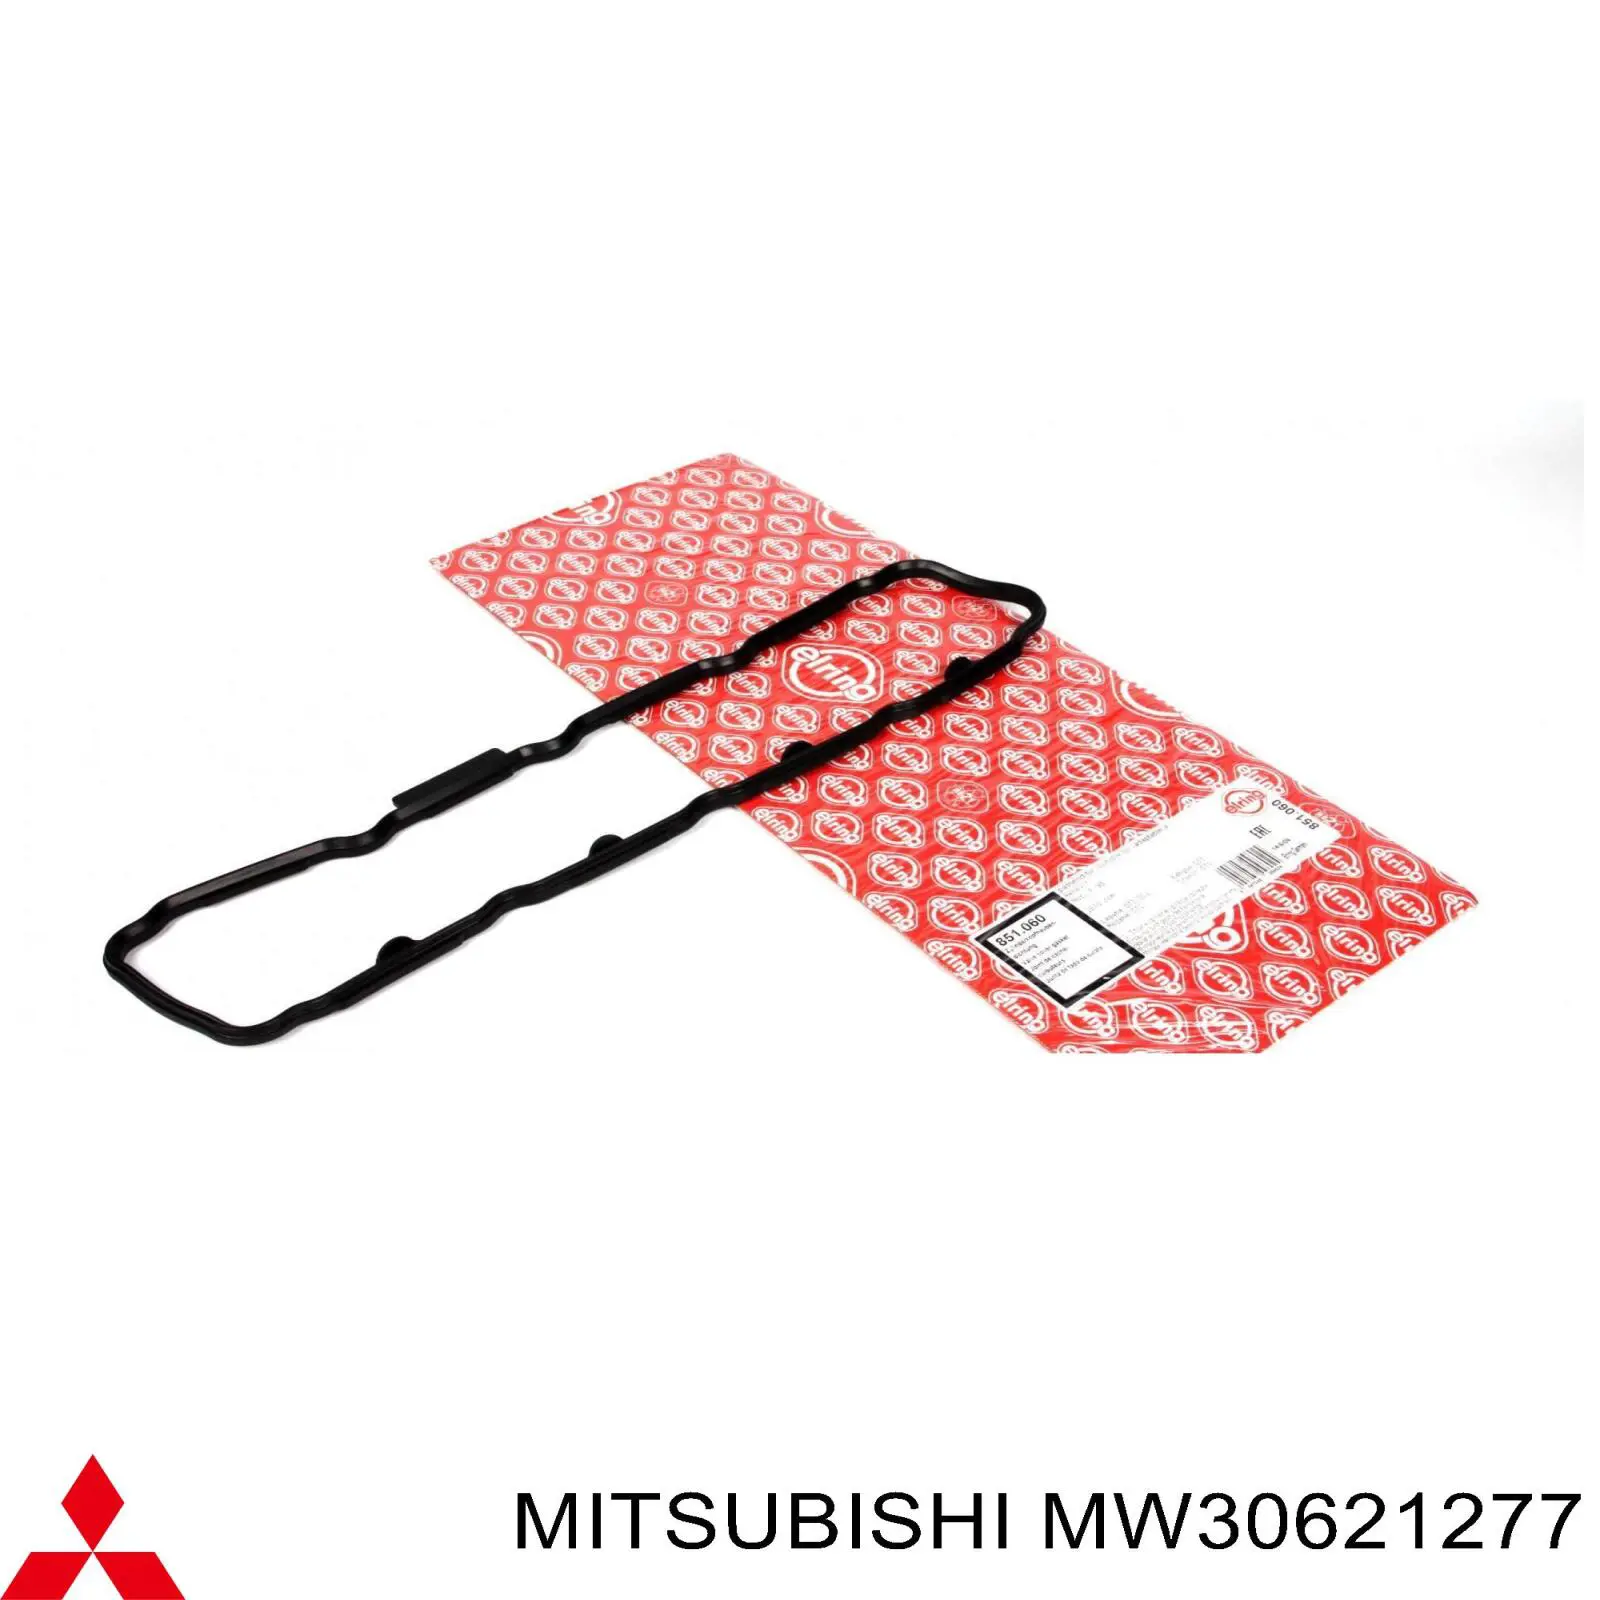 MW30621277 Mitsubishi junta de la tapa de válvulas del motor